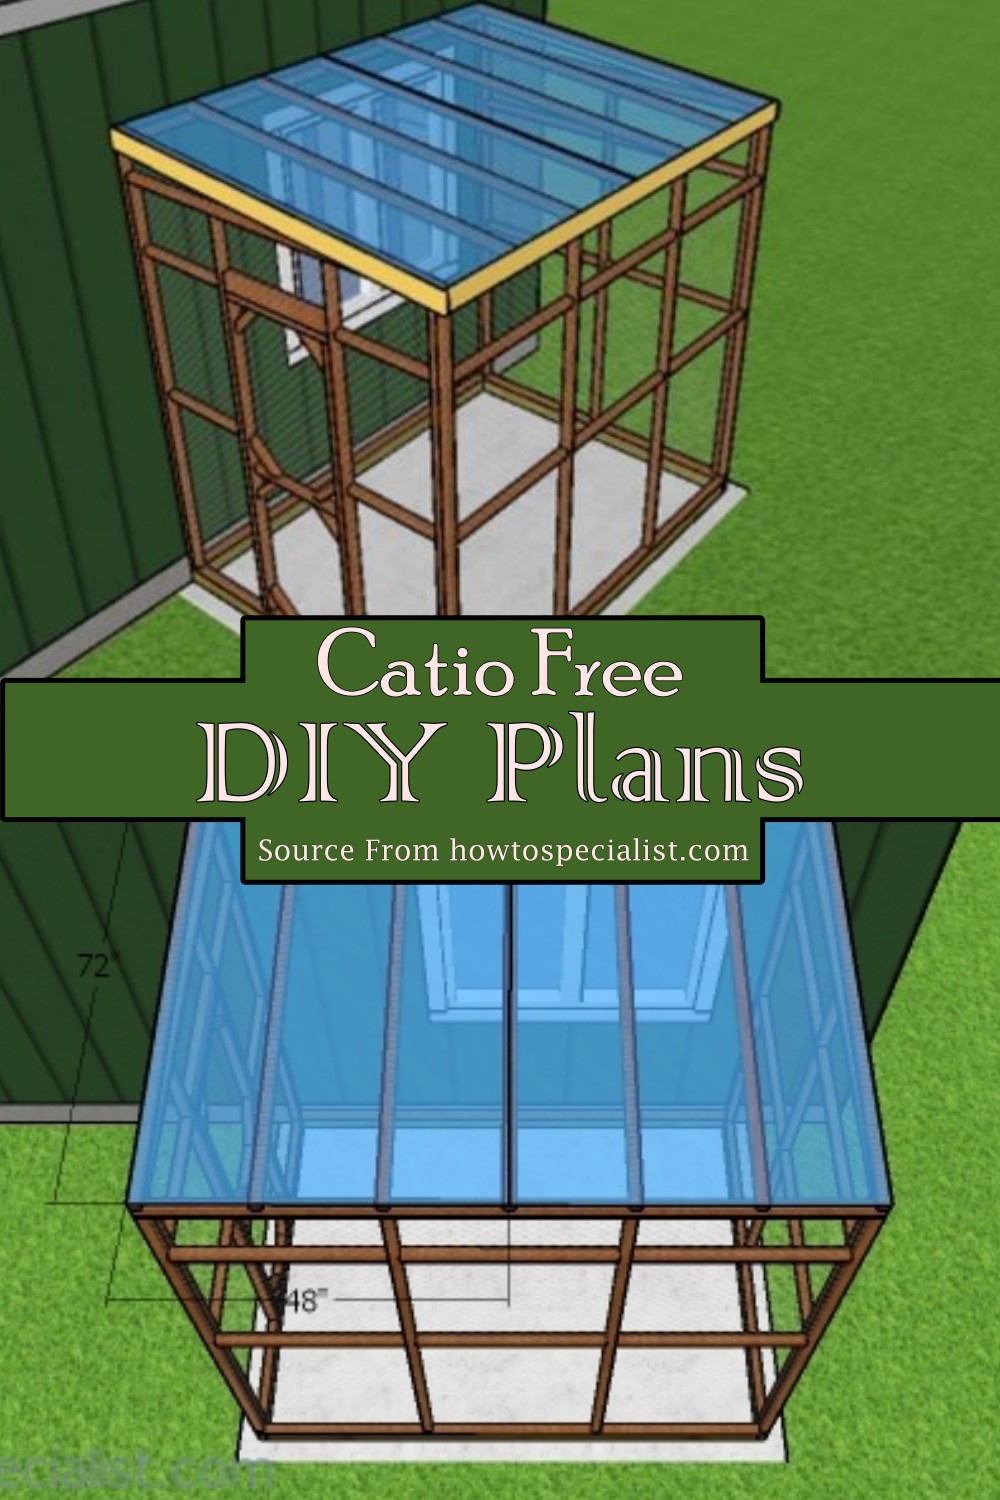 Catio Free DIY Plans